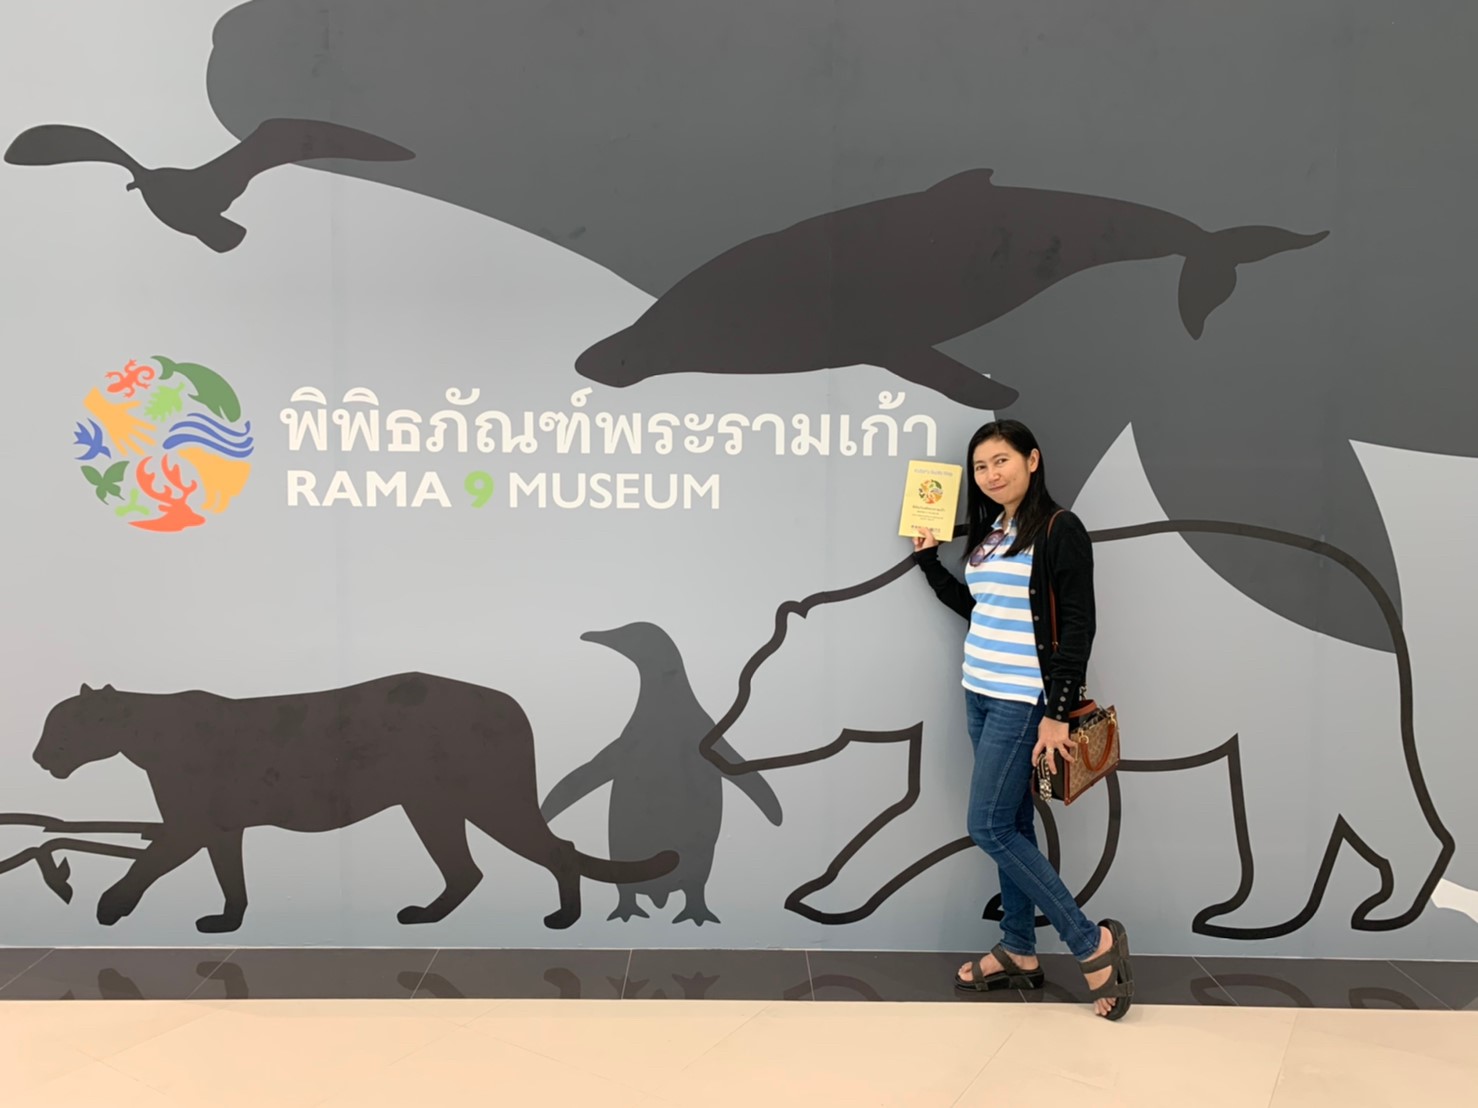 RAMA9 MUSEUM